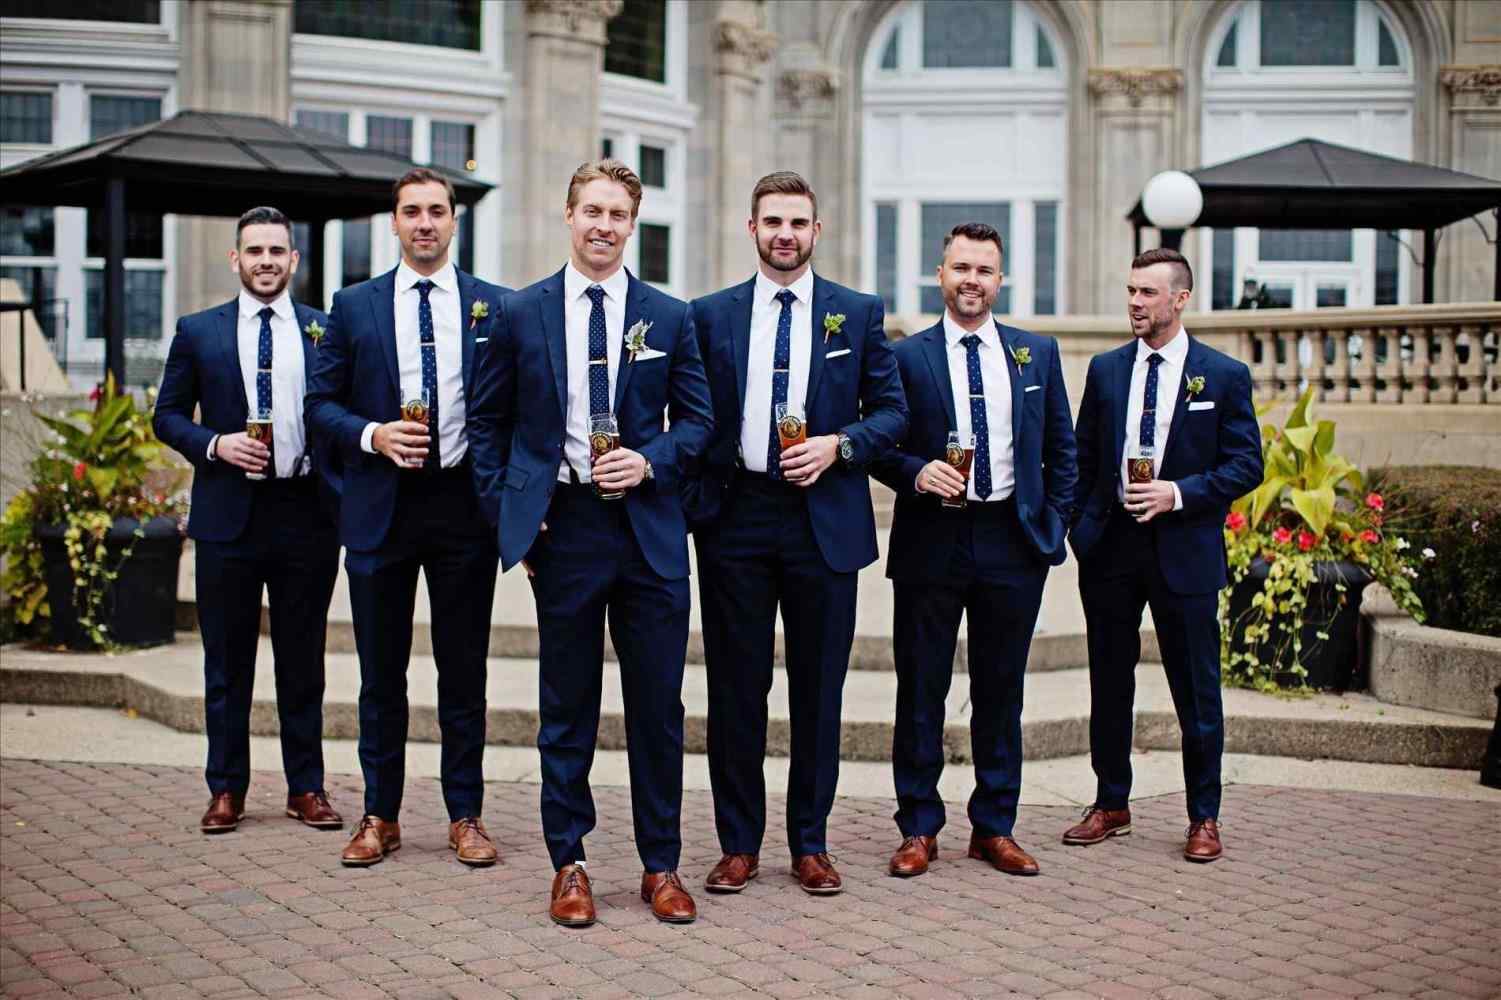 groomsmen-black-tuxedo-i-suit-ideas-like-this-style-wedding-rhmemmewebsite-green-shoesrhgreenweddingshoescom-grooms-groomsmen-black-tuxedo-green-wedding-shoesrhgreenweddingshoescom-in-classic.jpg